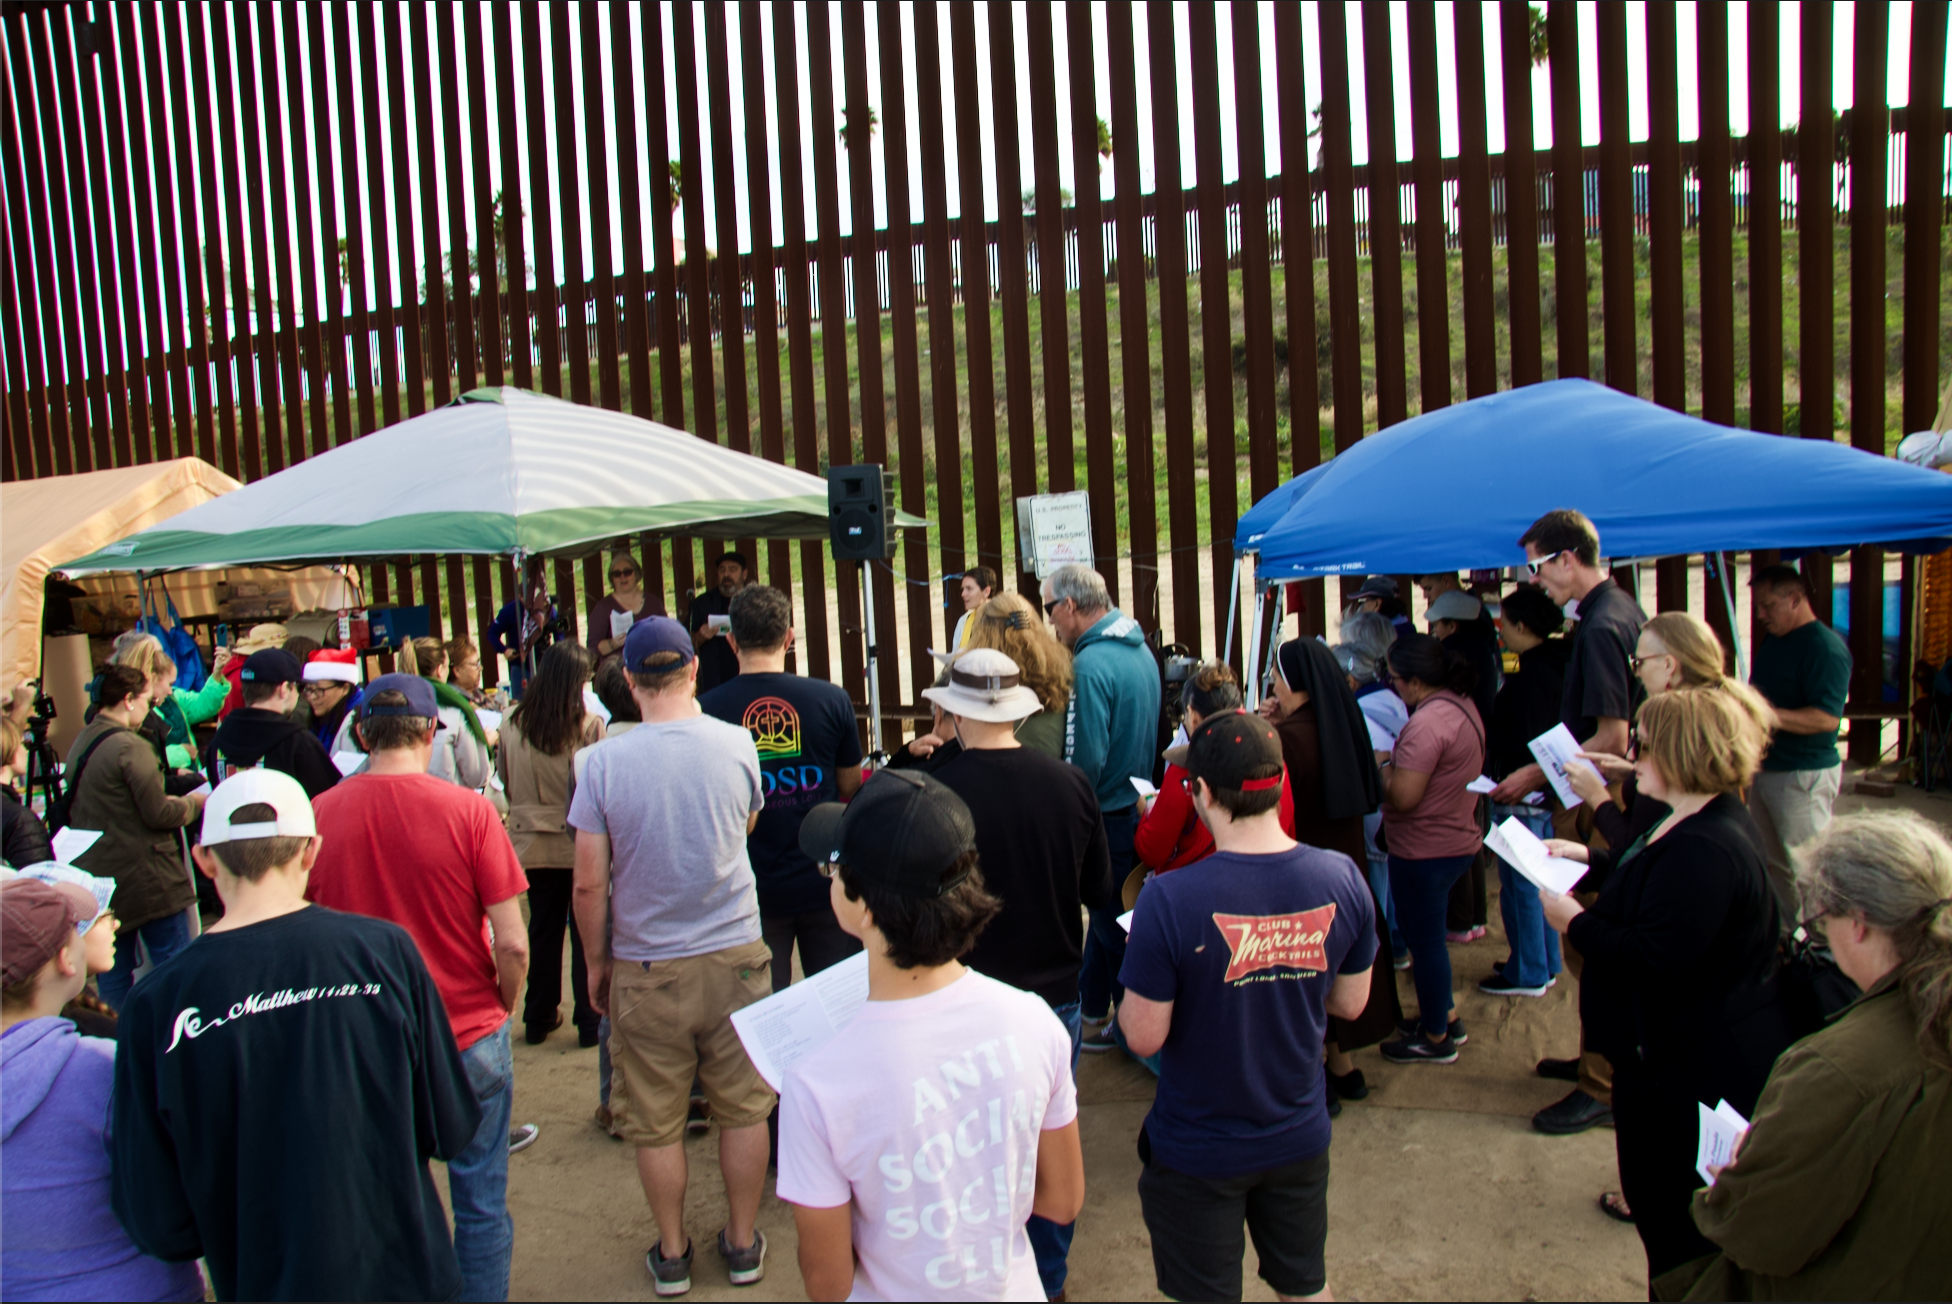 Gathering of people at U.S.-Mexico border wall